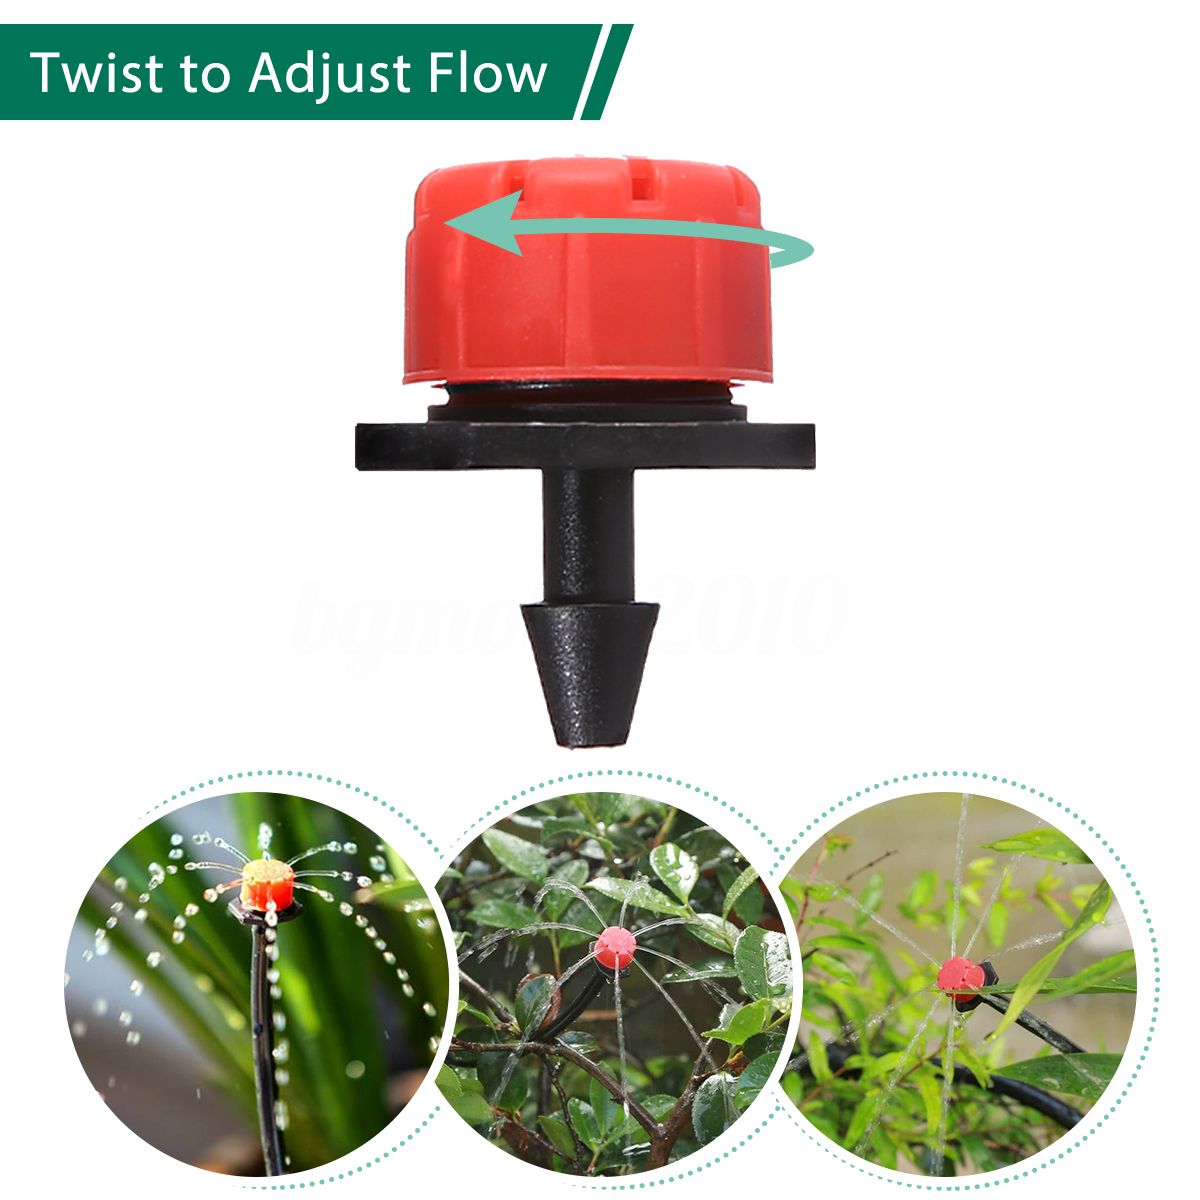 50-Plant-Garden-Drip-Irrigation-Watering-System-40pcs-Drippers-Misting-Drip-Irrigation-Kit-1574544